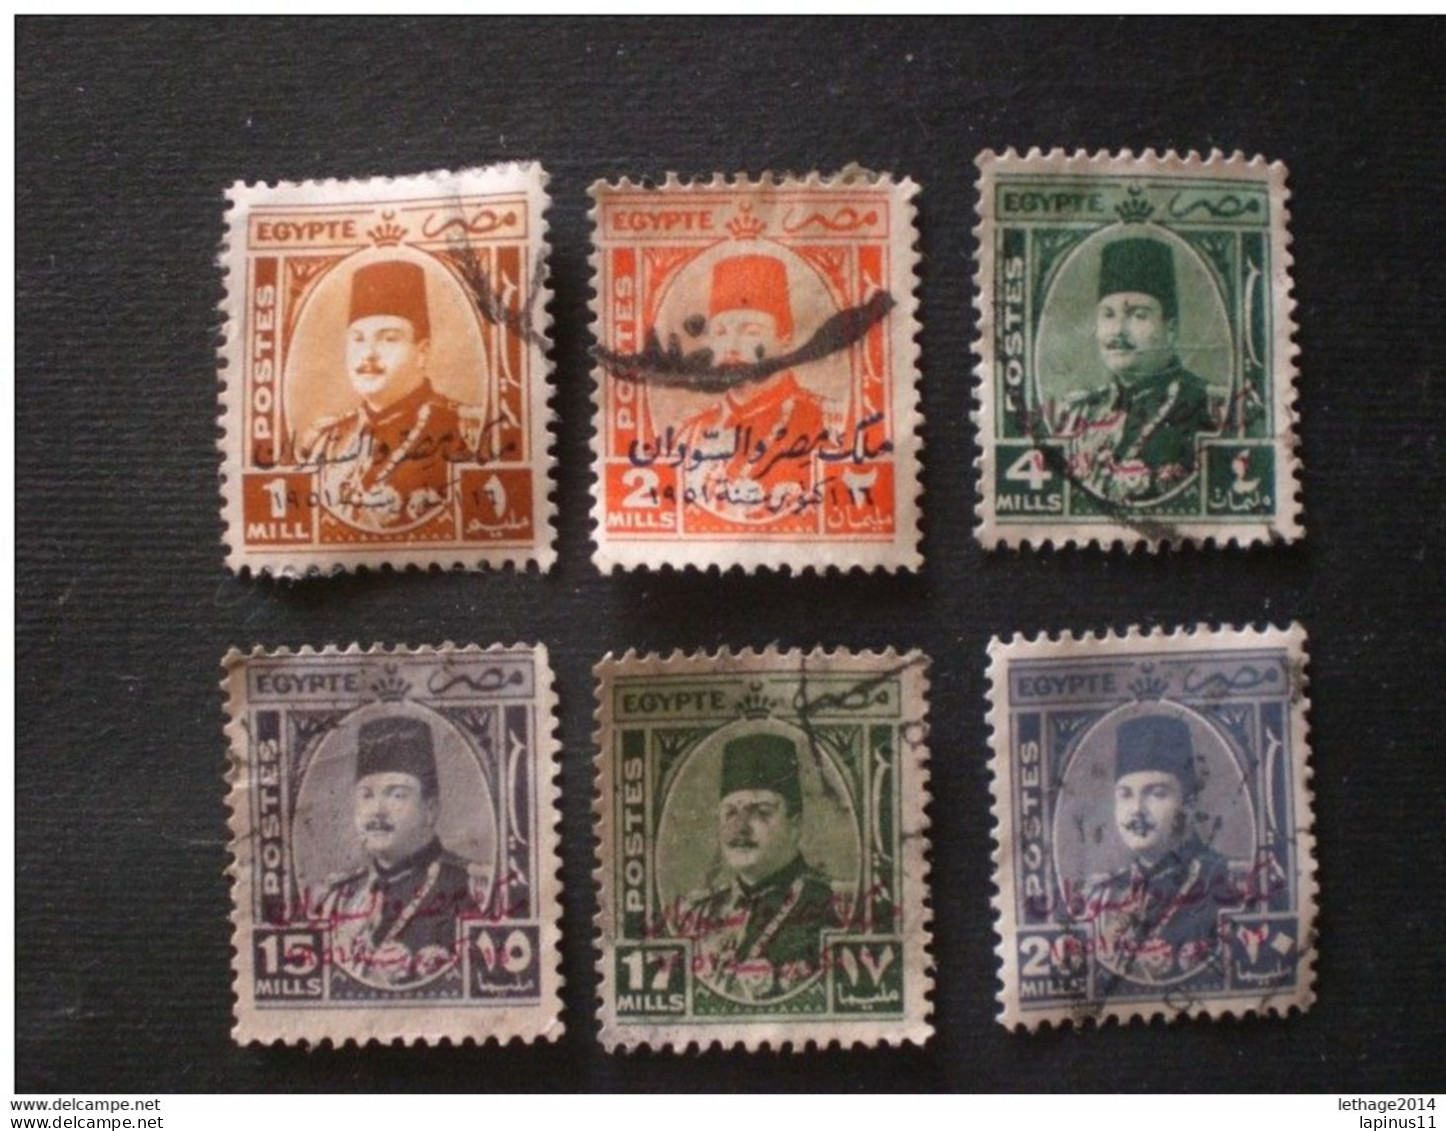 EGYPT 1948 King Farouk - Egypt Postage Stamps Of 1951 Overprinted "SUDAN" In Arabic RARE - Oblitérés